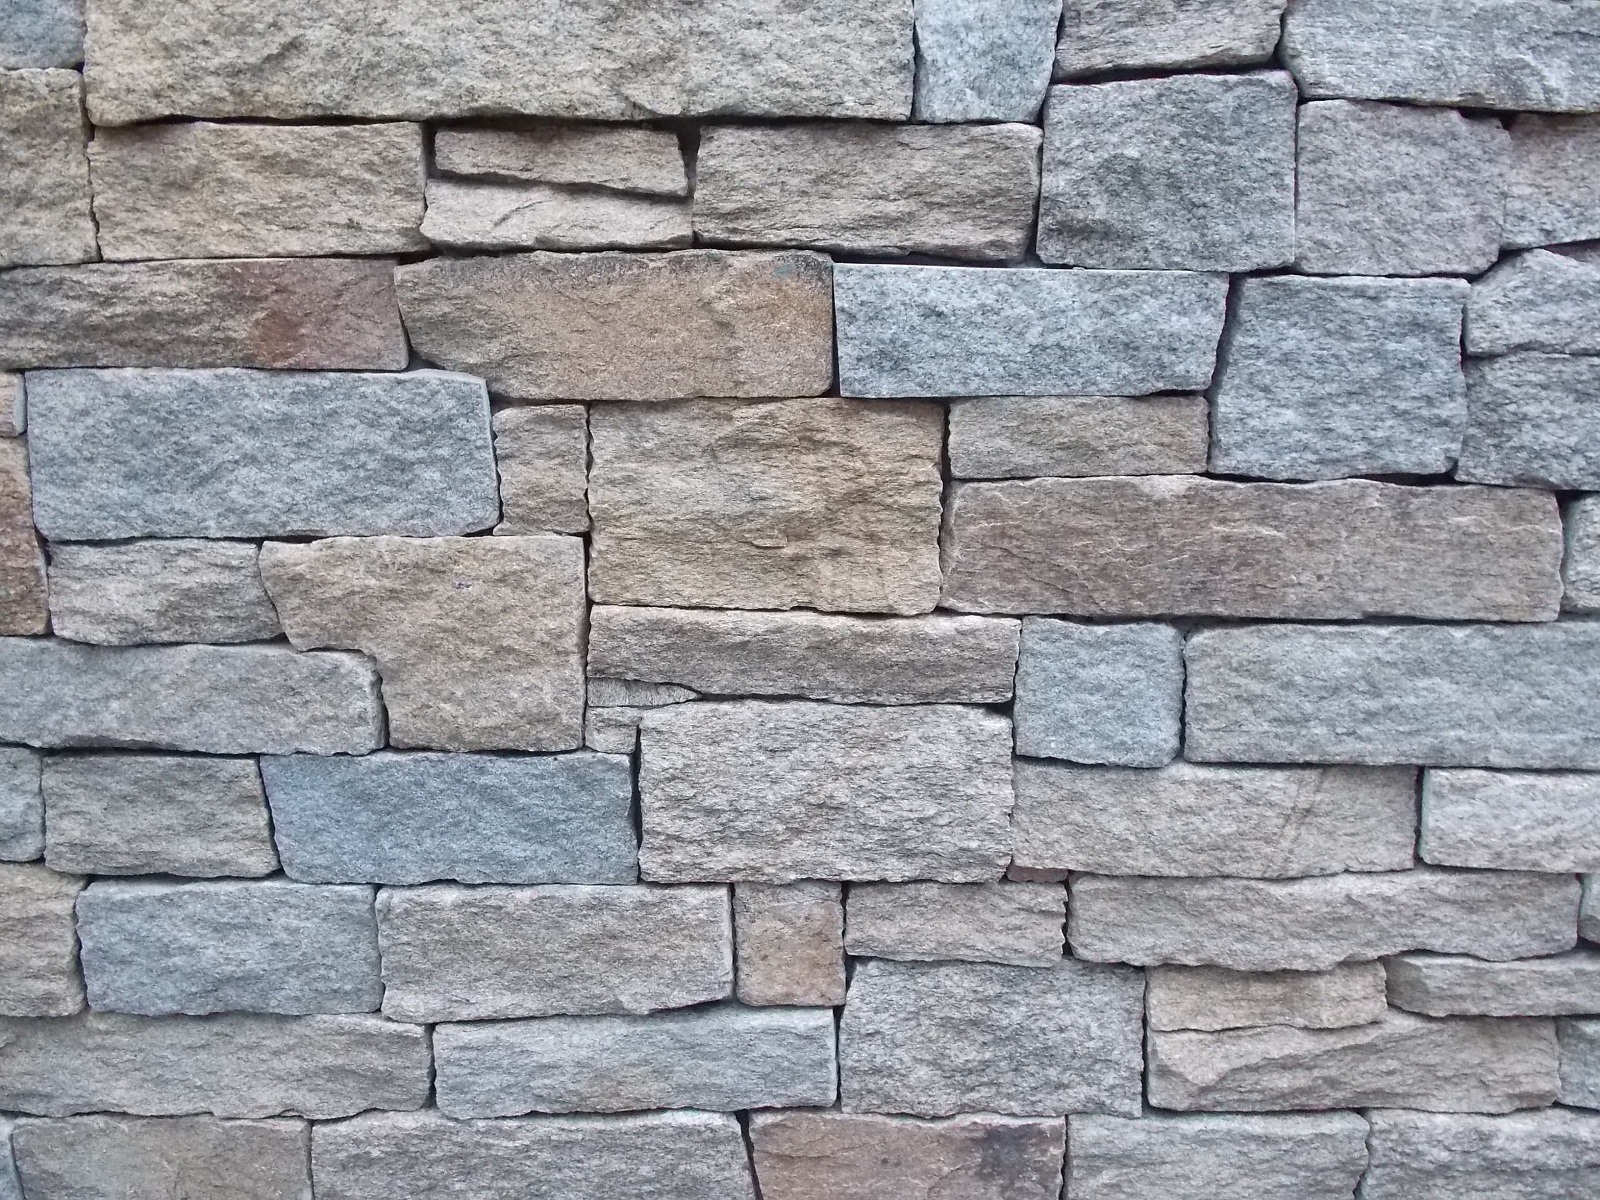 Ultrawide Wallpapers Wall stone, photography, slate, man made